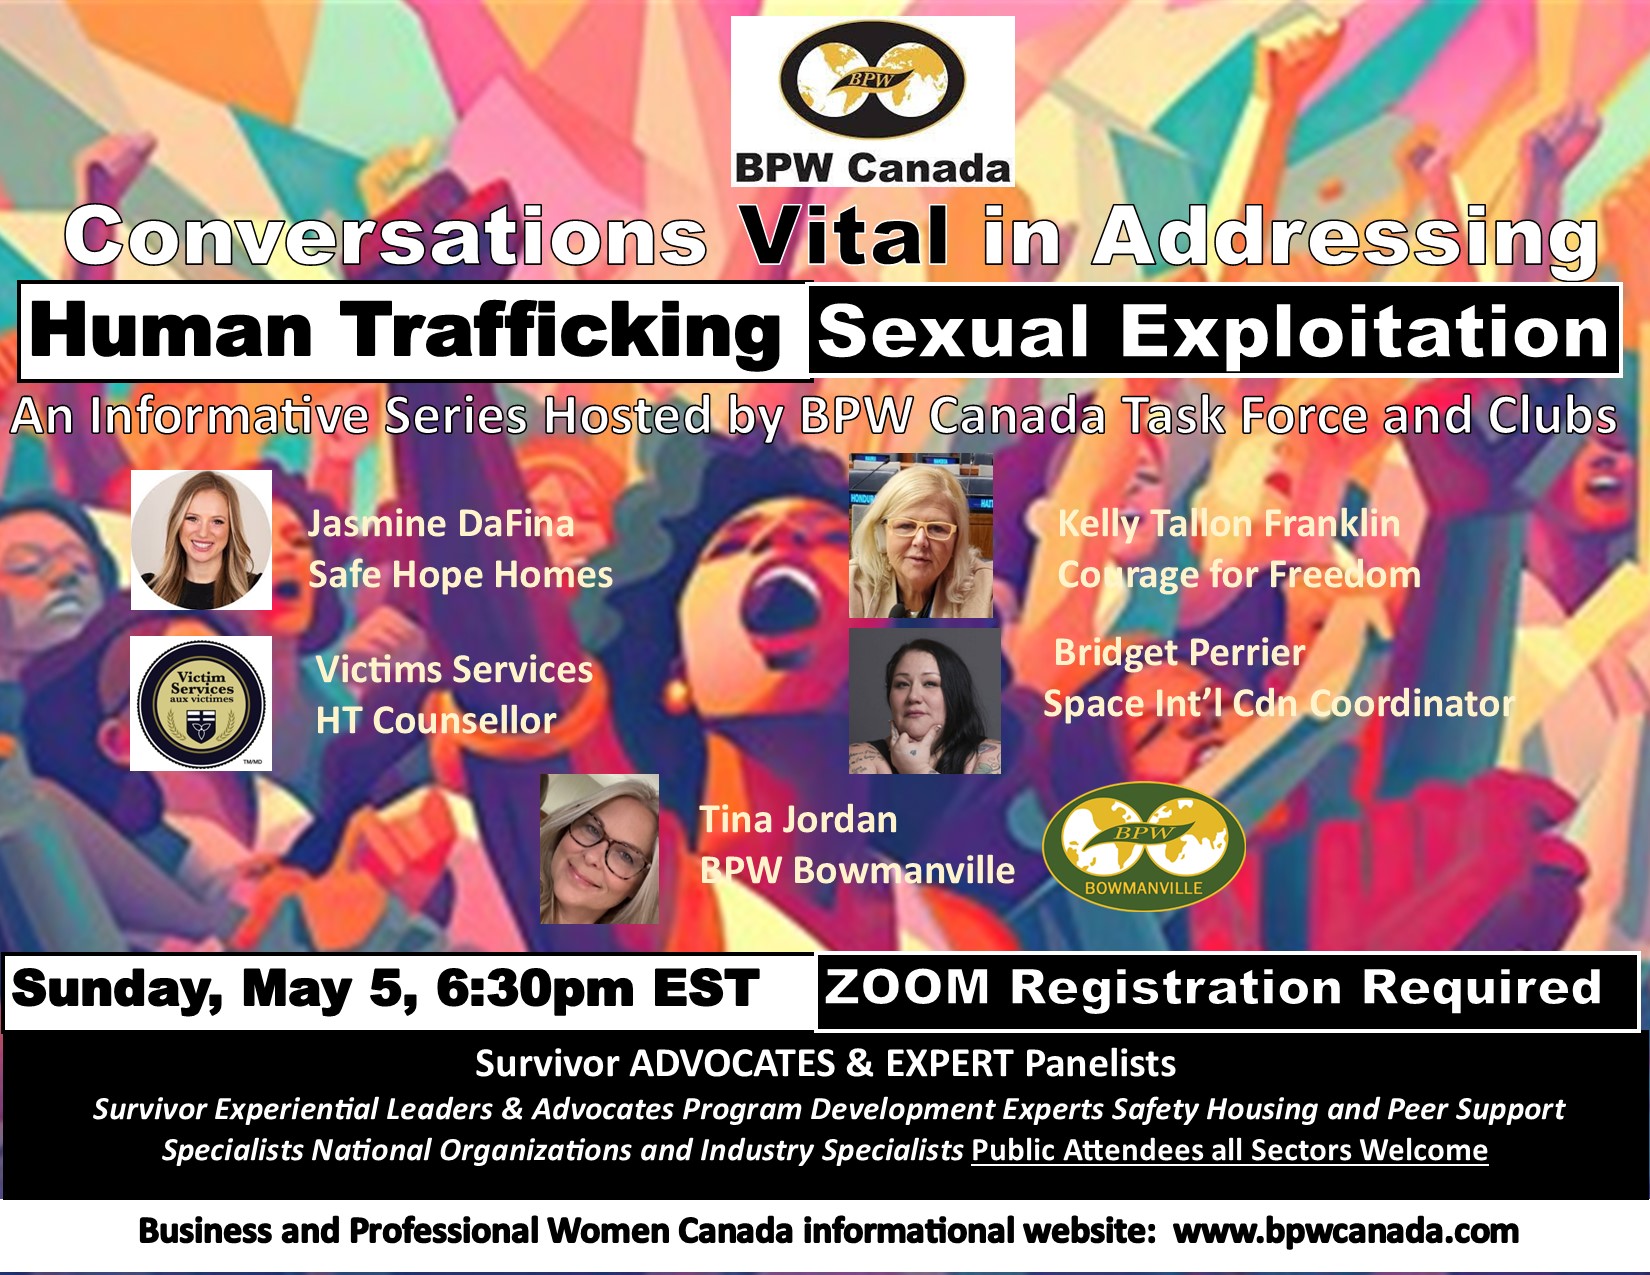 BPW Canada Anti-Human Trafficking Task Force & BPW Bowmanville